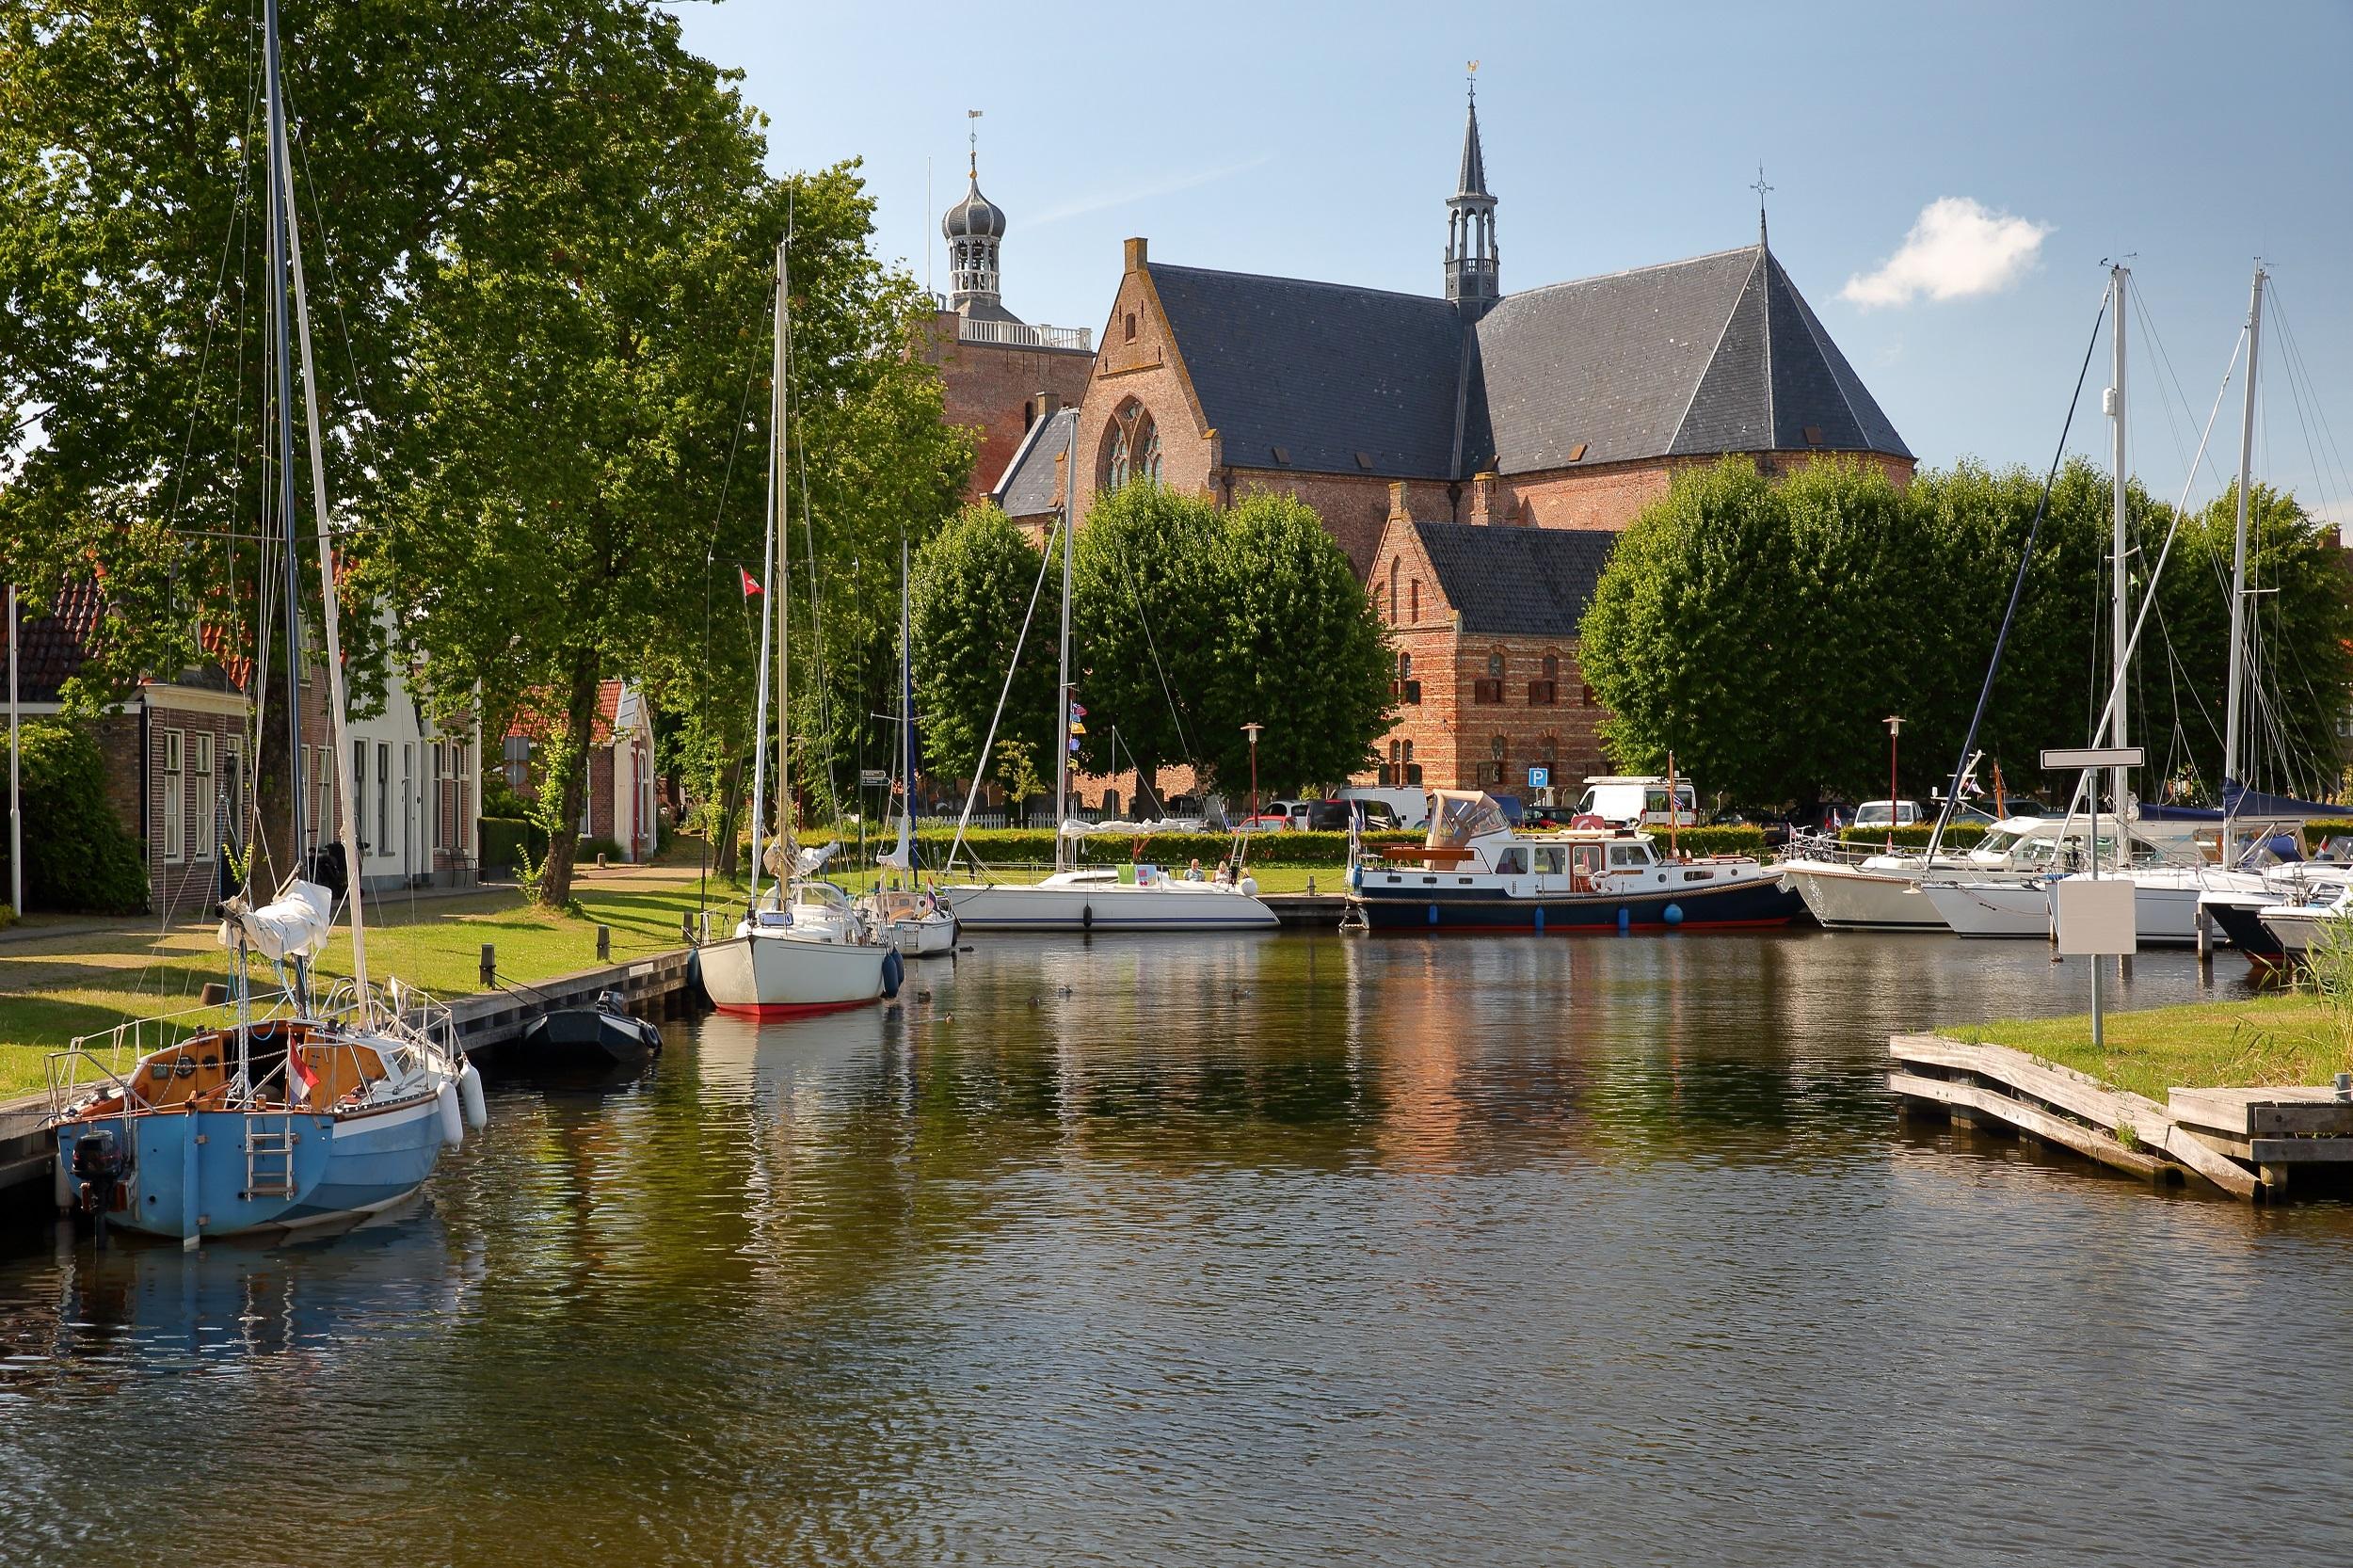 Kerk van Workum in Friesland, Nederland